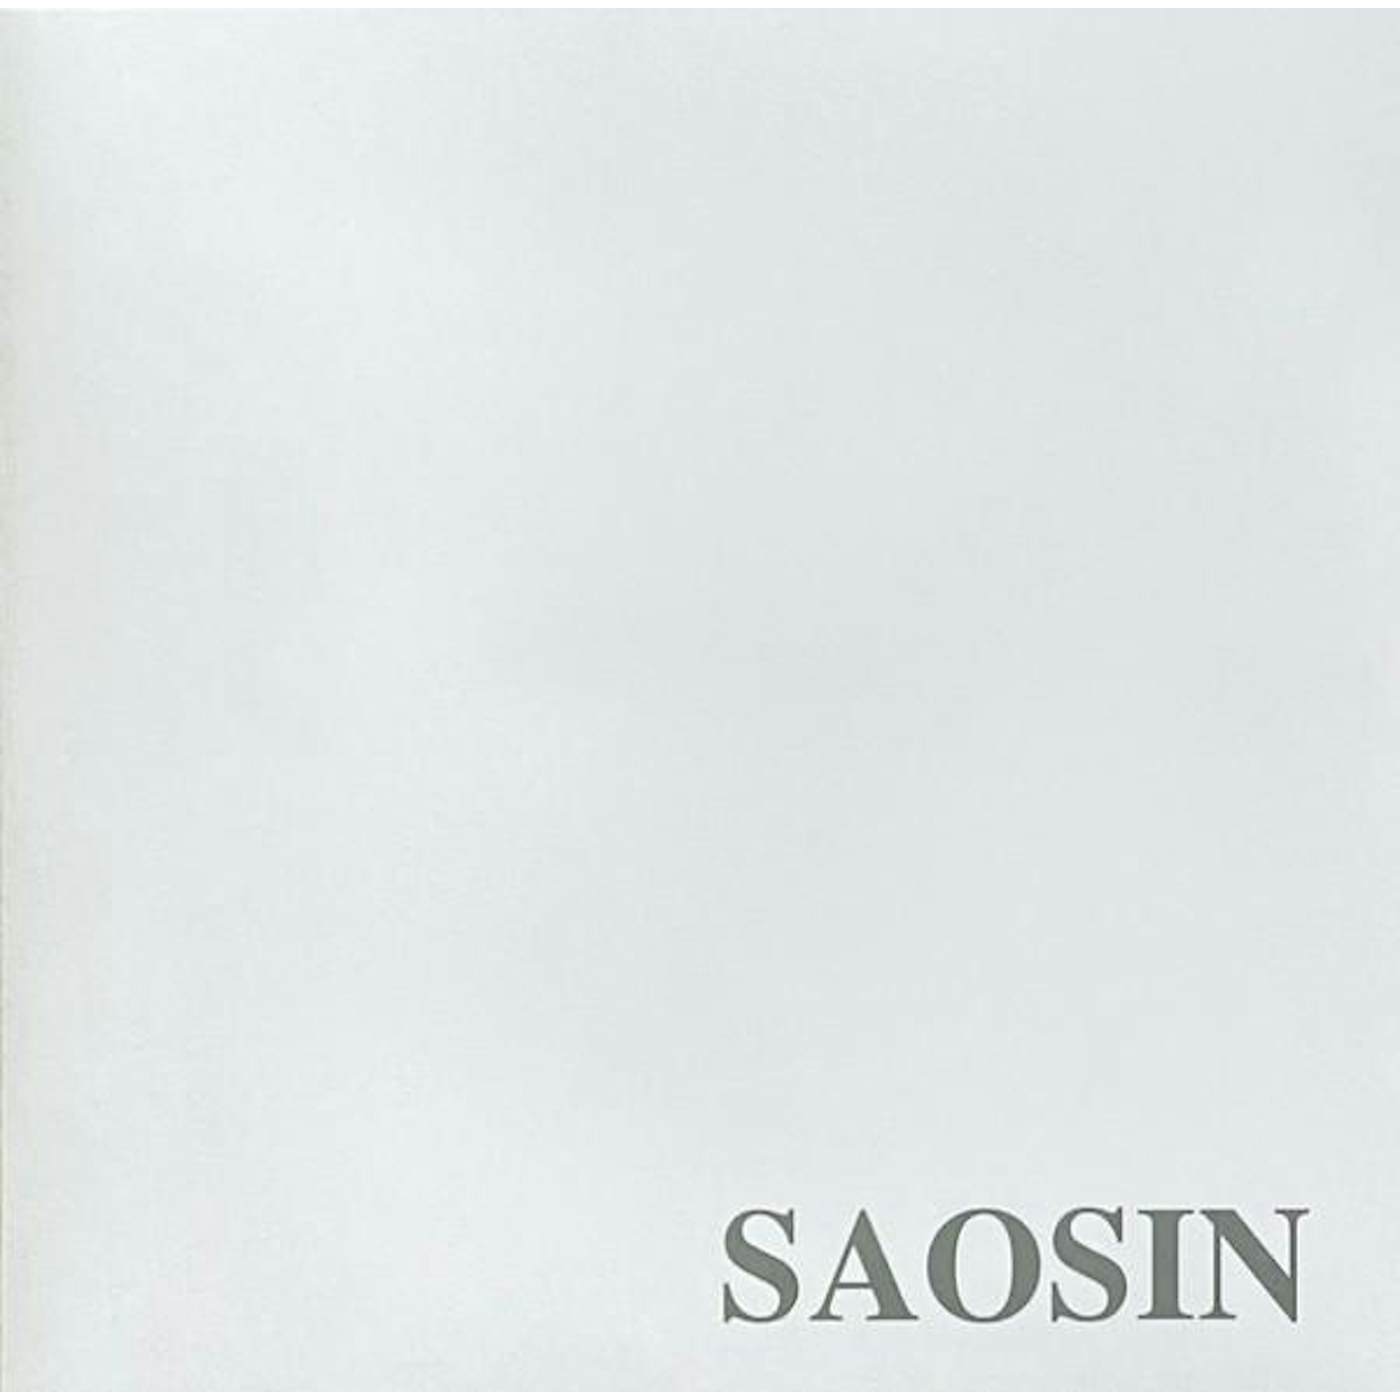 Saosin TRANSLATING THE NAME CD